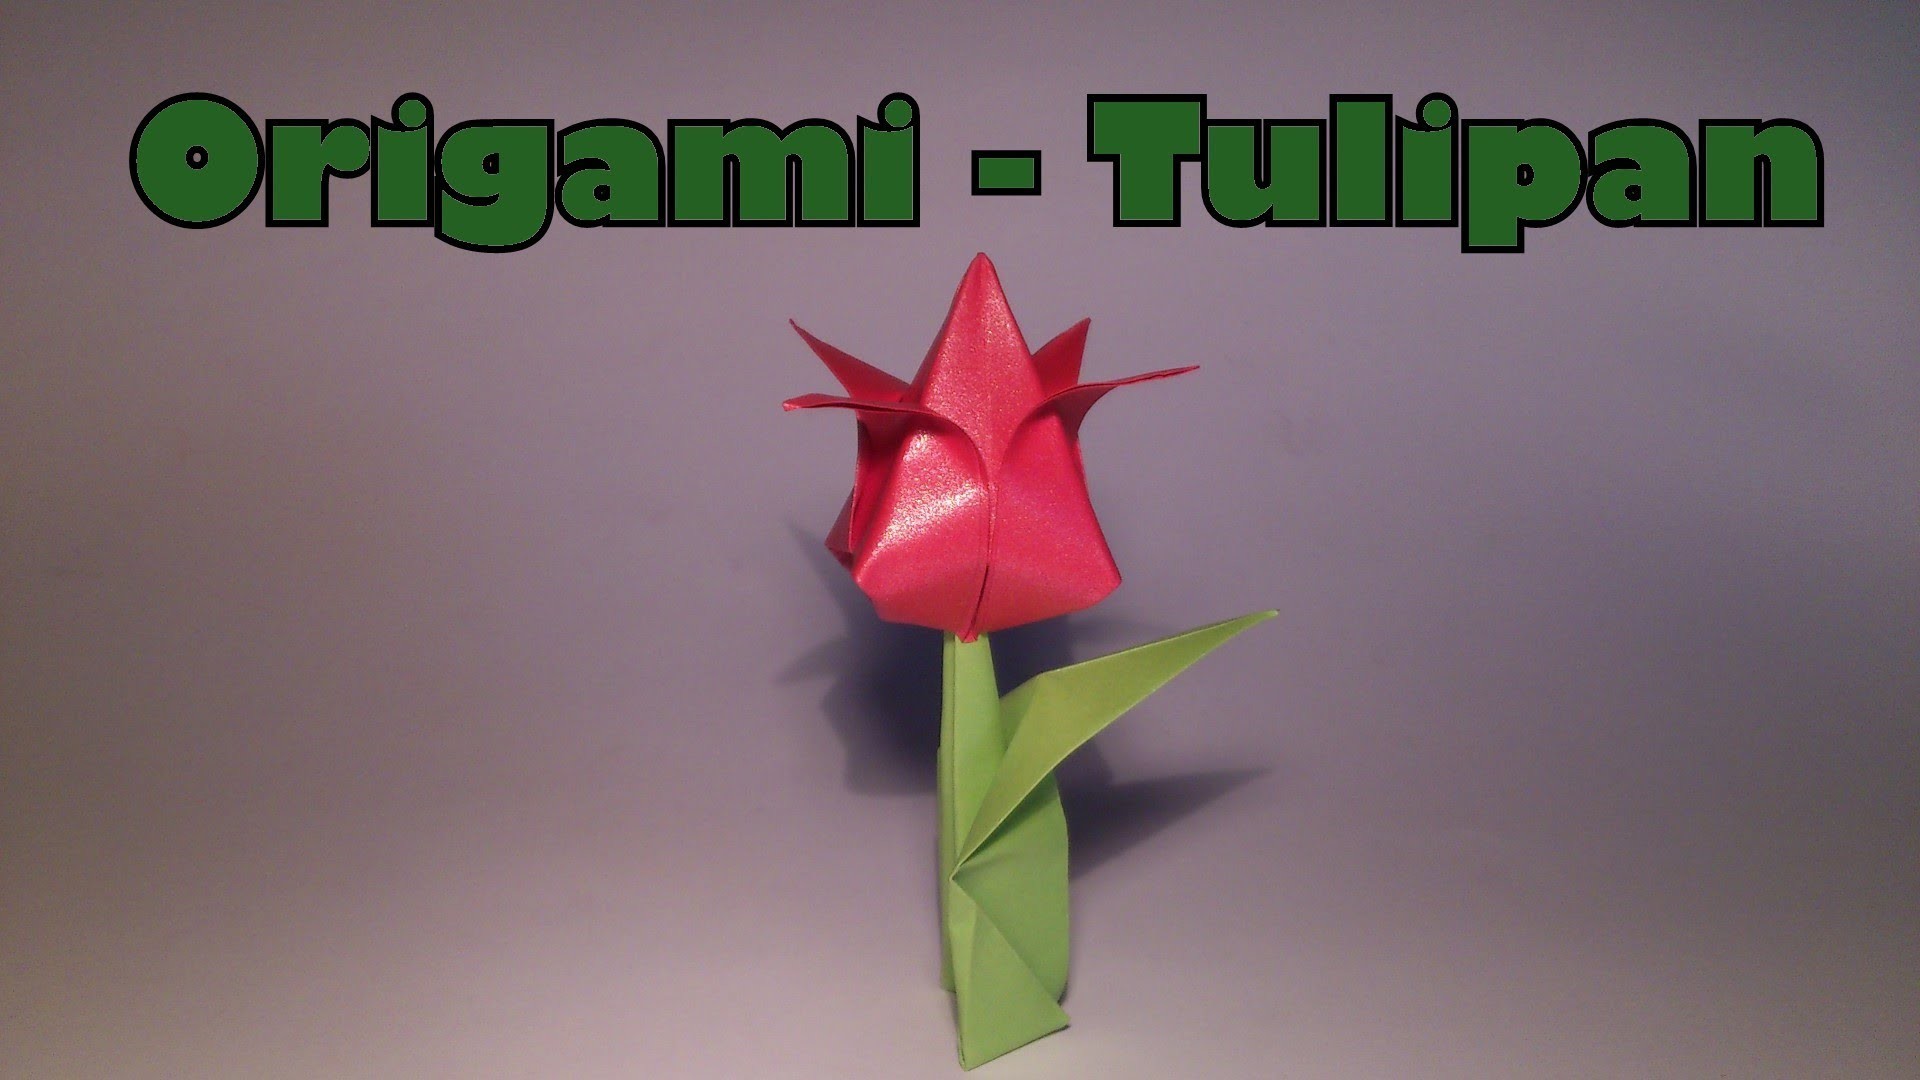 Origami - Tulipan (Chcecie VLOGA?)